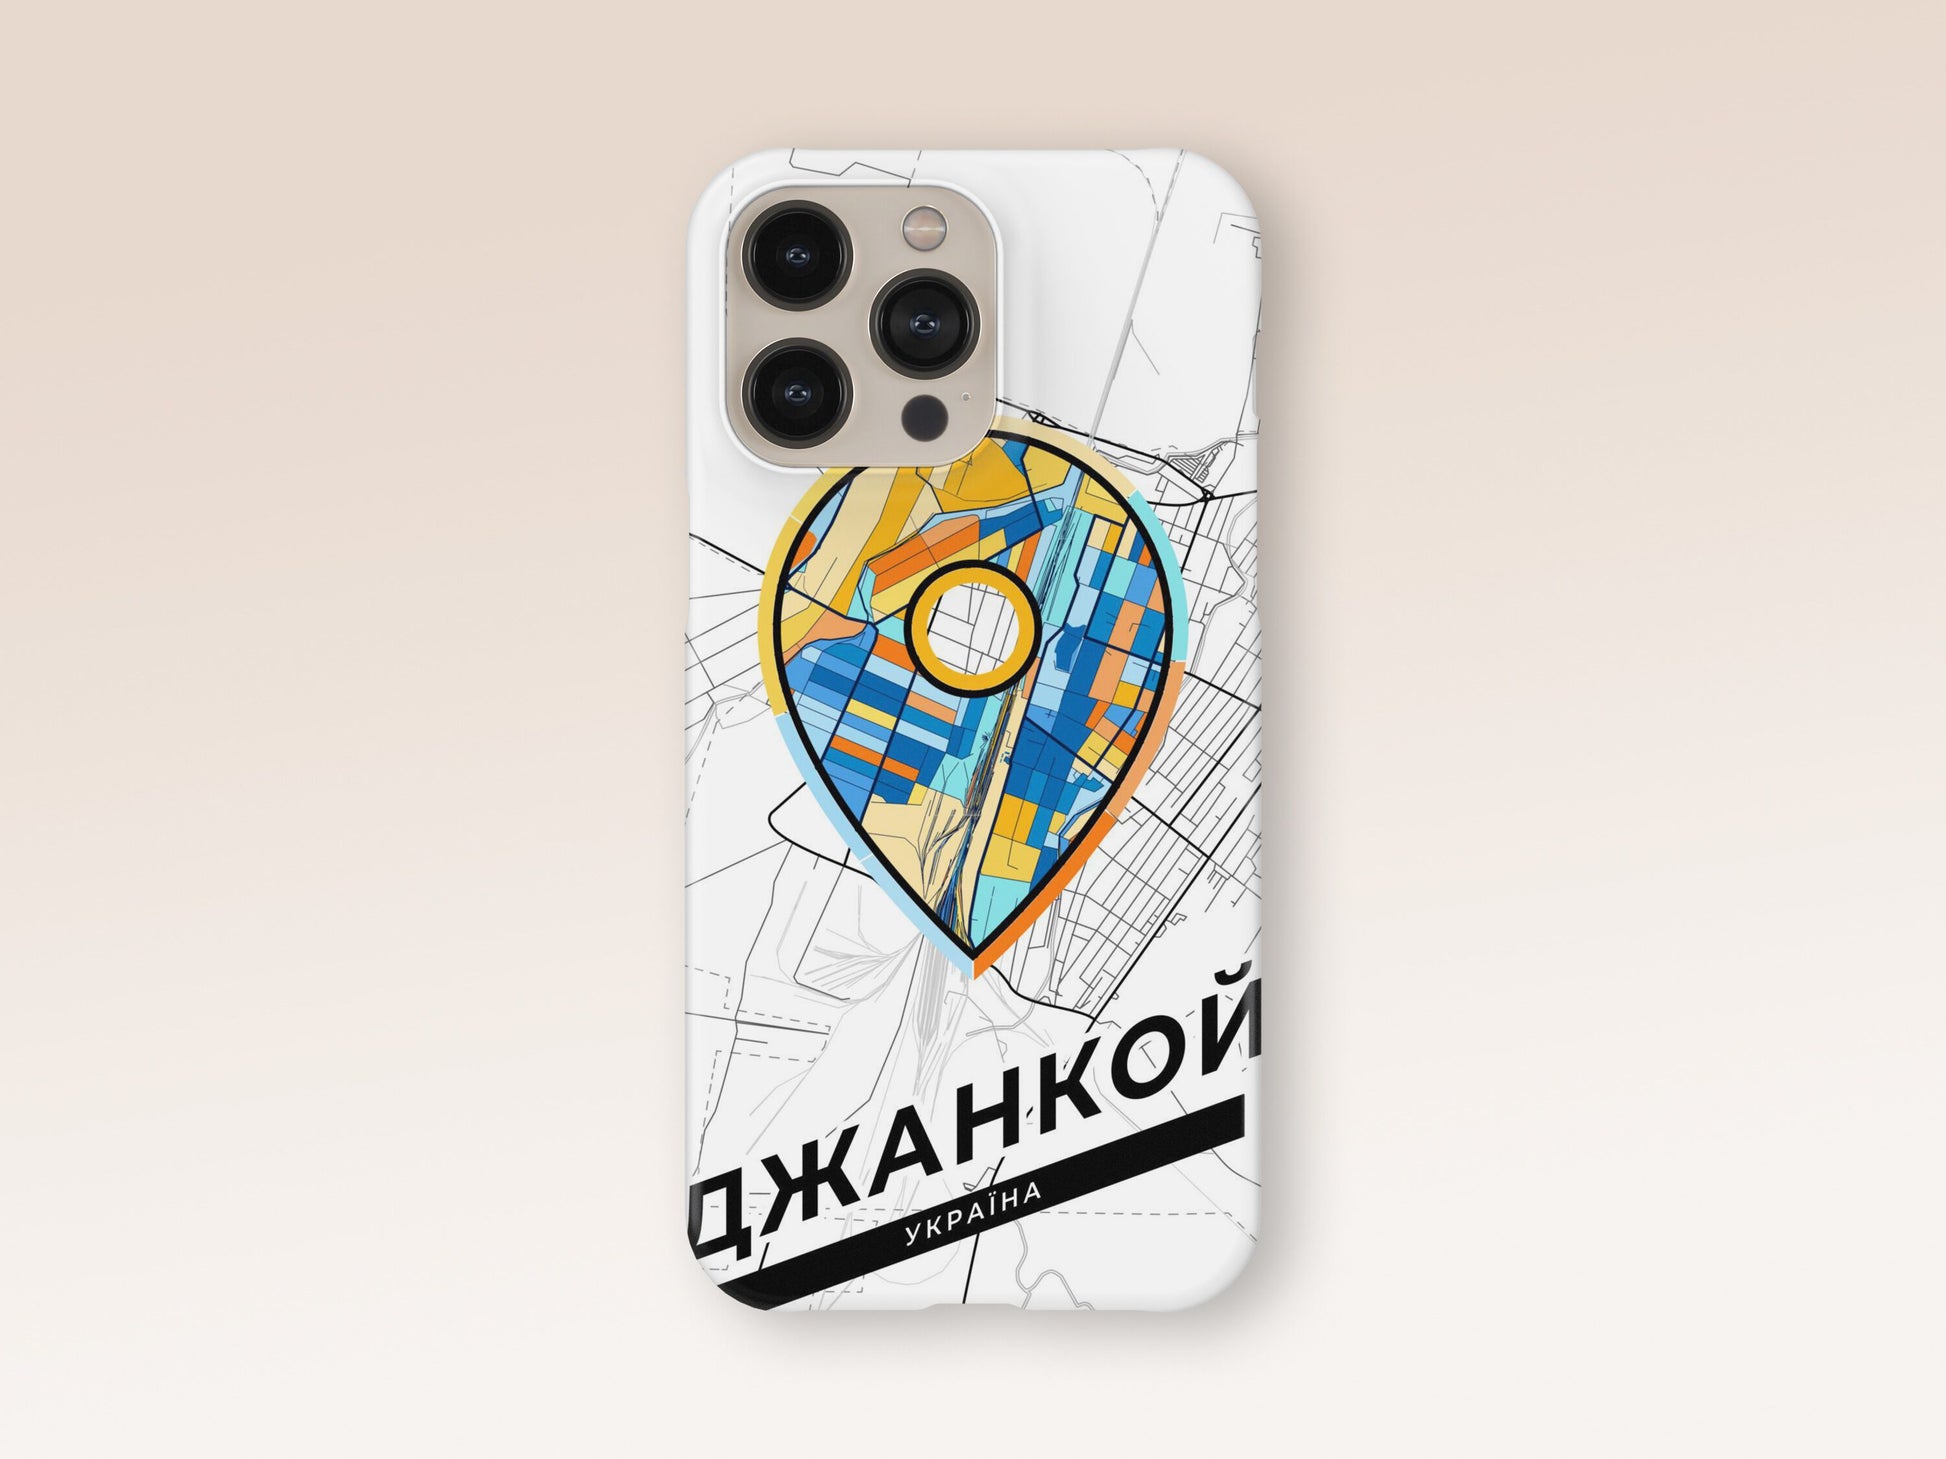 Dzhankoy Ukraine slim phone case with colorful icon. Birthday, wedding or housewarming gift. Couple match cases. 1